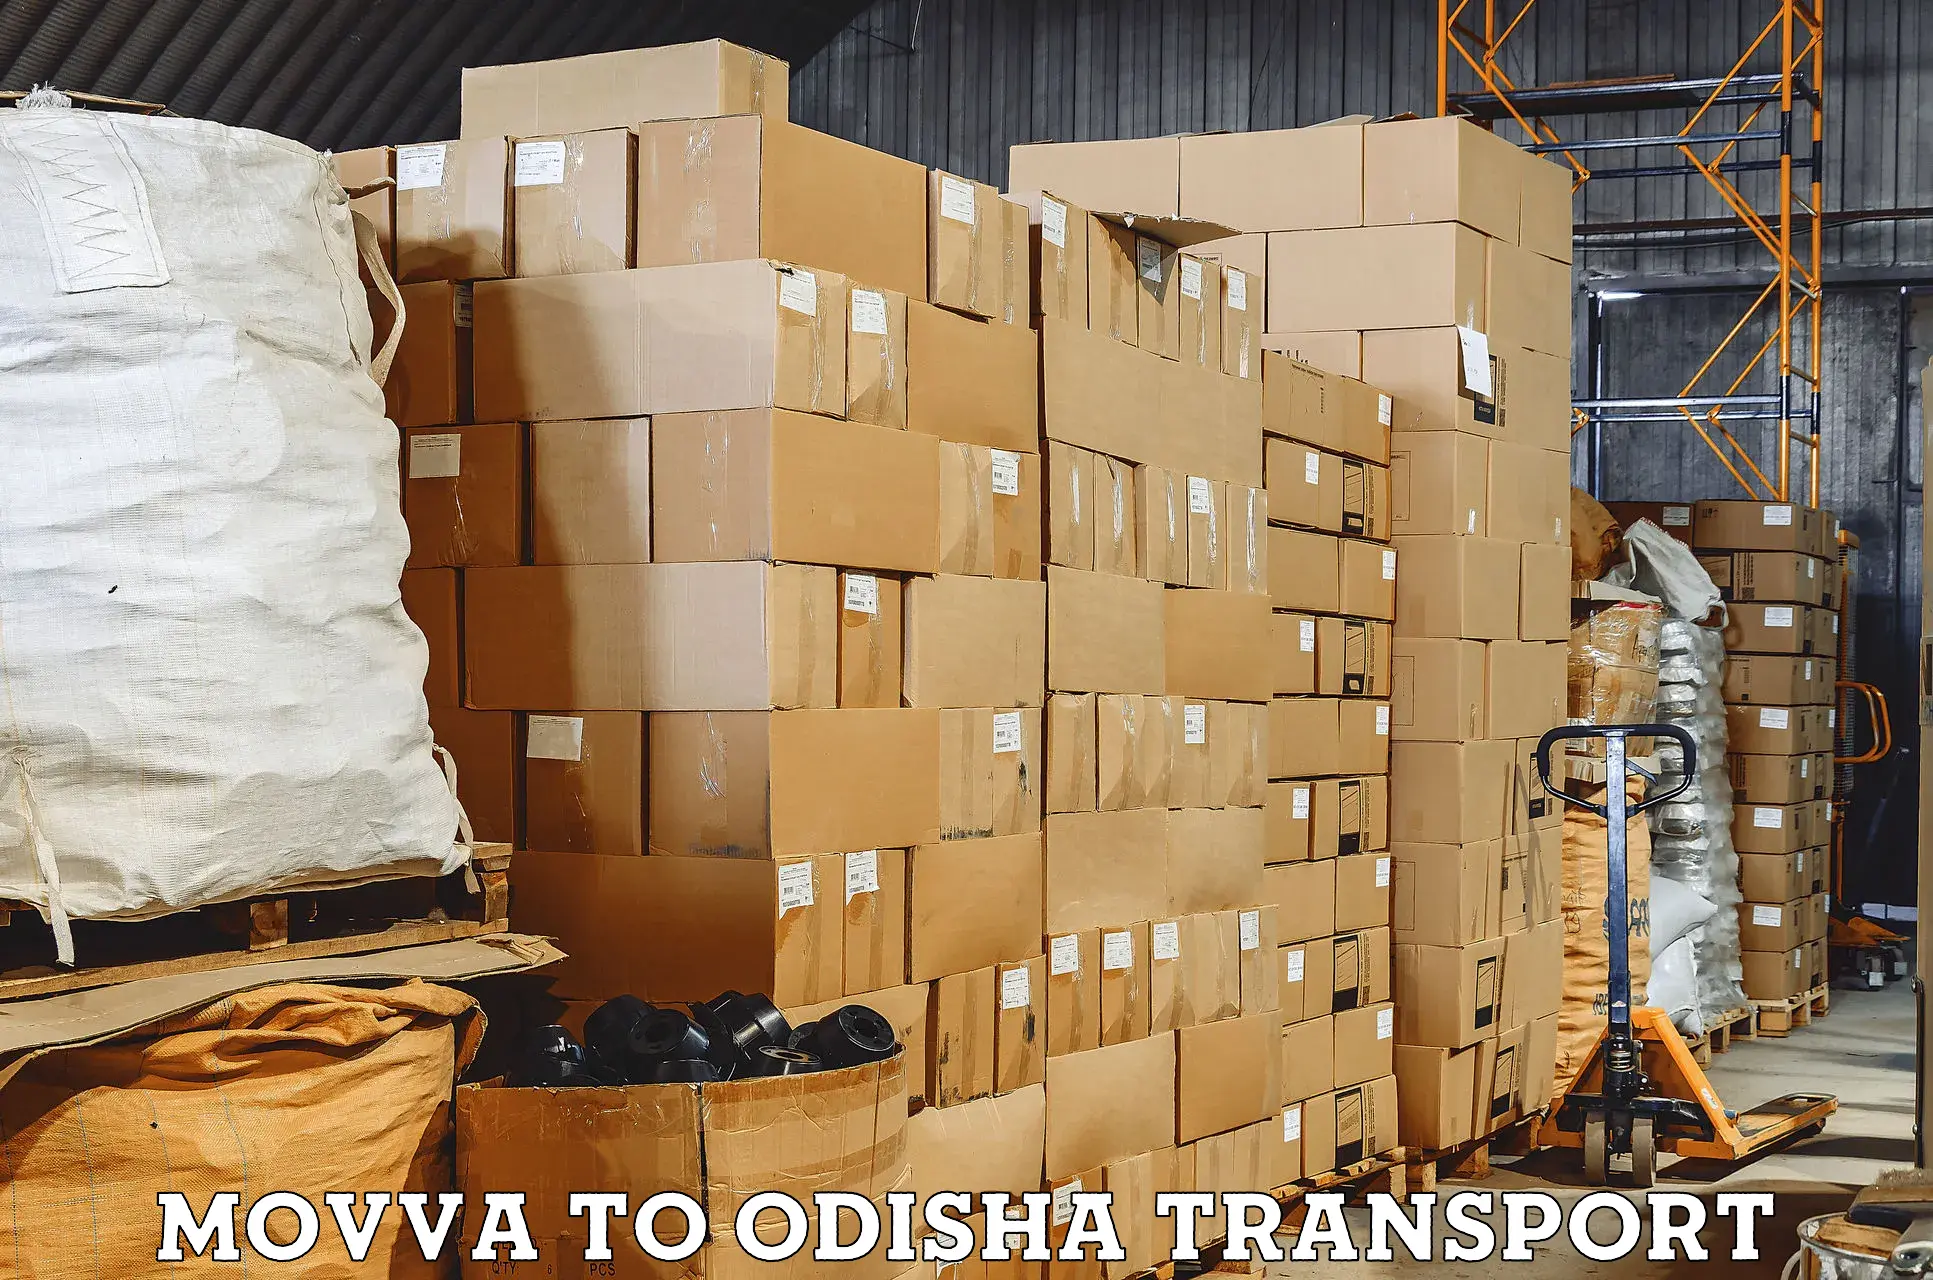 Furniture transport service Movva to Loisingha